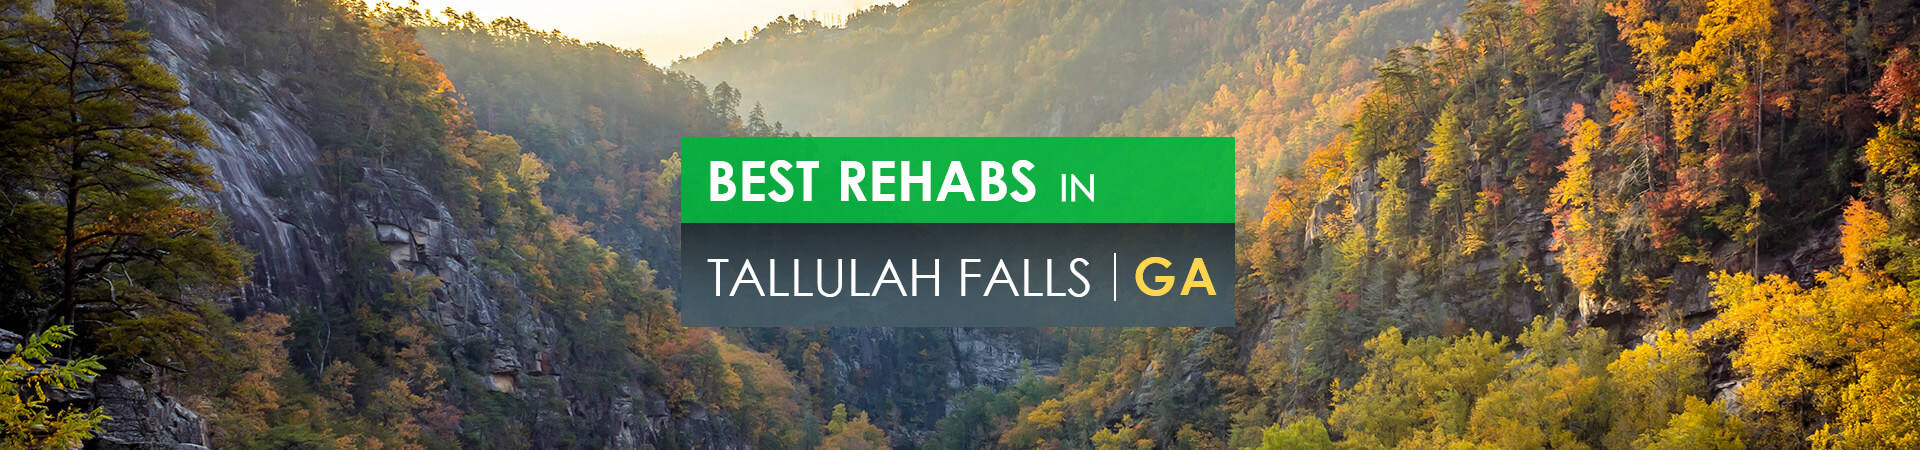 Best rehabs in Tallulah Falls, GA